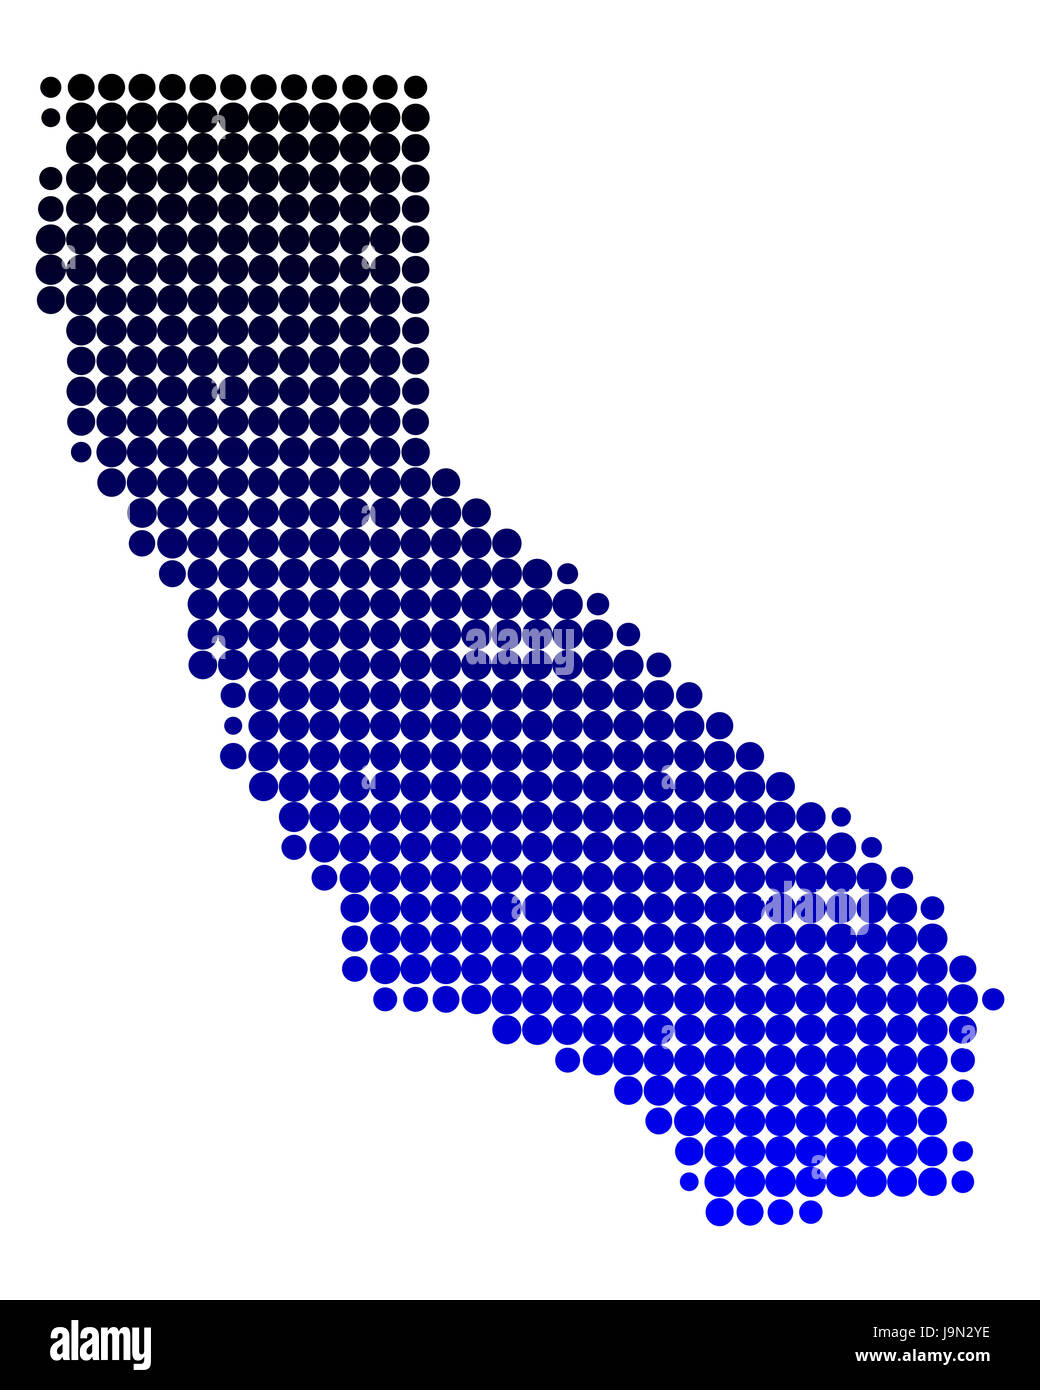 blue, usa, california, america, illustration, circle, card, spotted, dot, Stock Photo